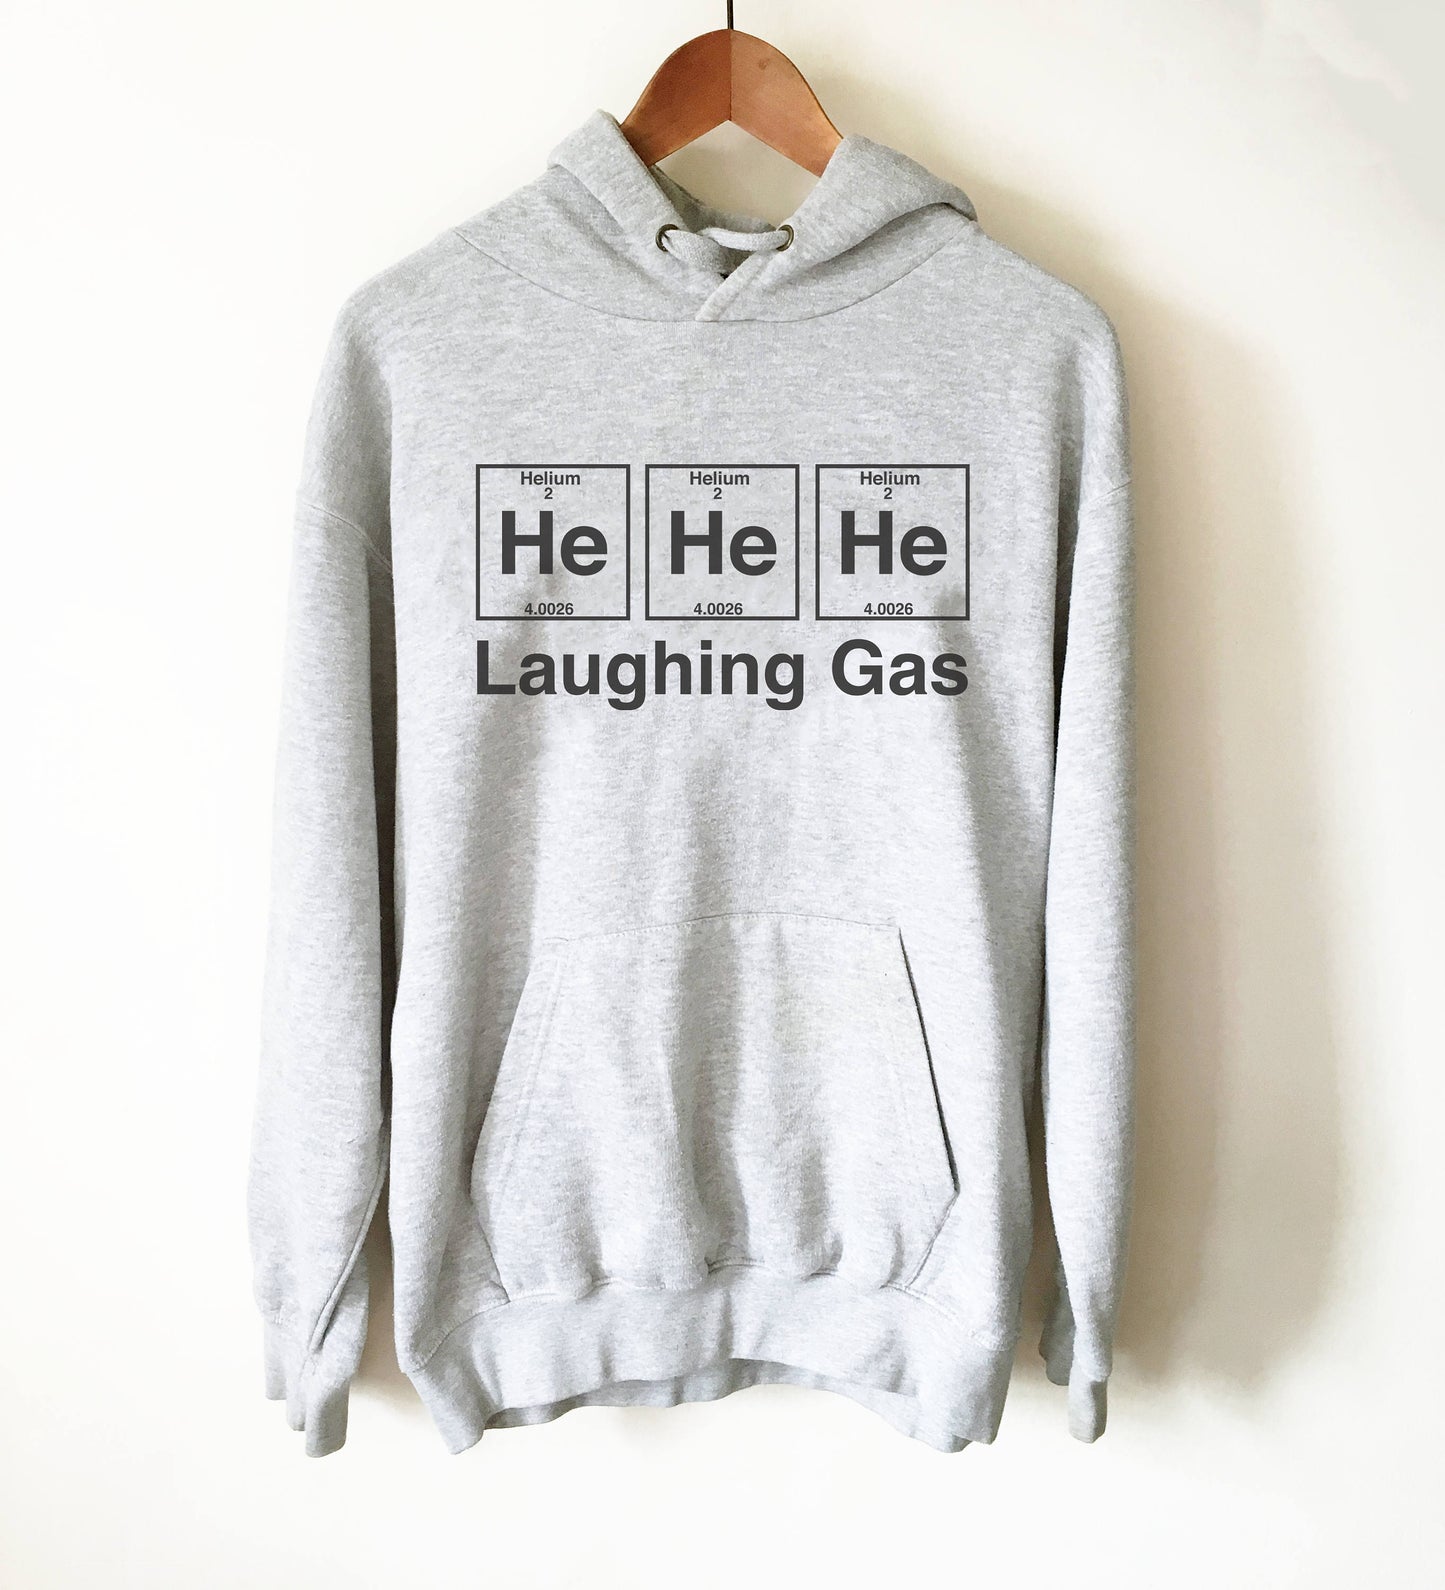 He He He Laughing Gas Hoodie - Chemistry shirt, Science shirt, Periodic table shirt, Chemistry gift, Chemistry teacher, Chemist gift